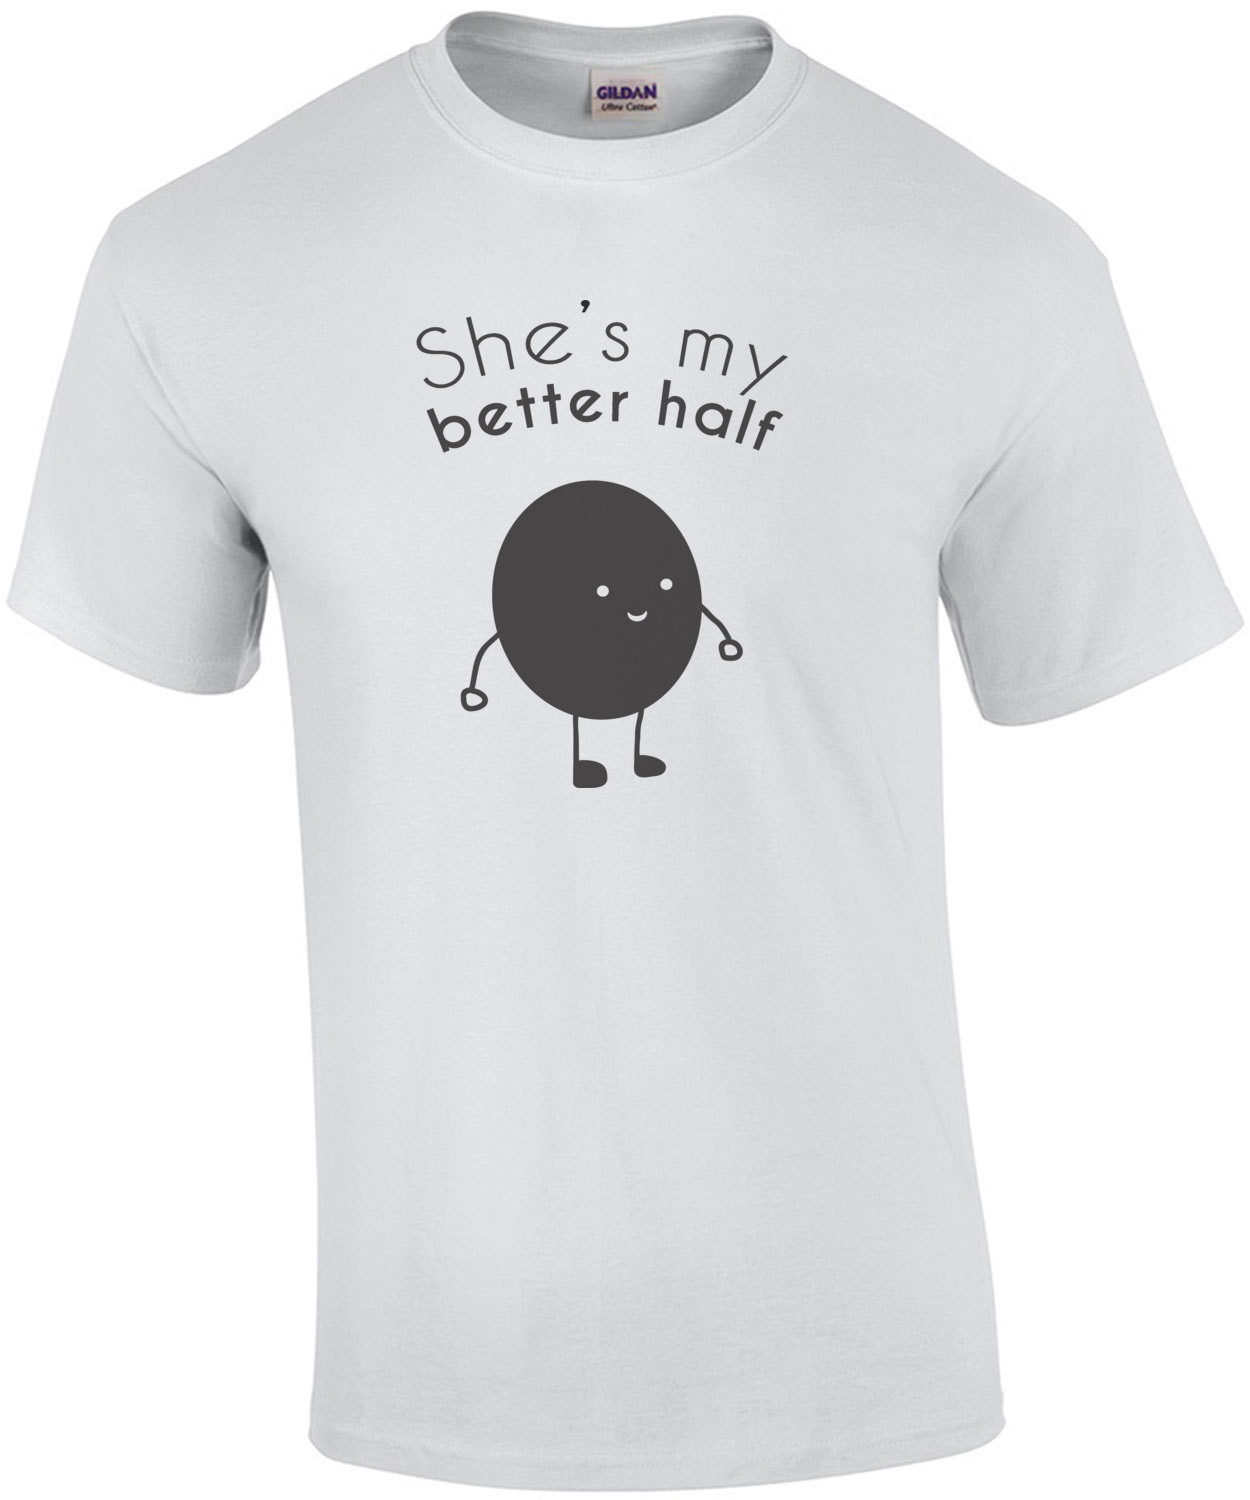 She's my better half - oreo cookie t-shirt - couple's t-shirt